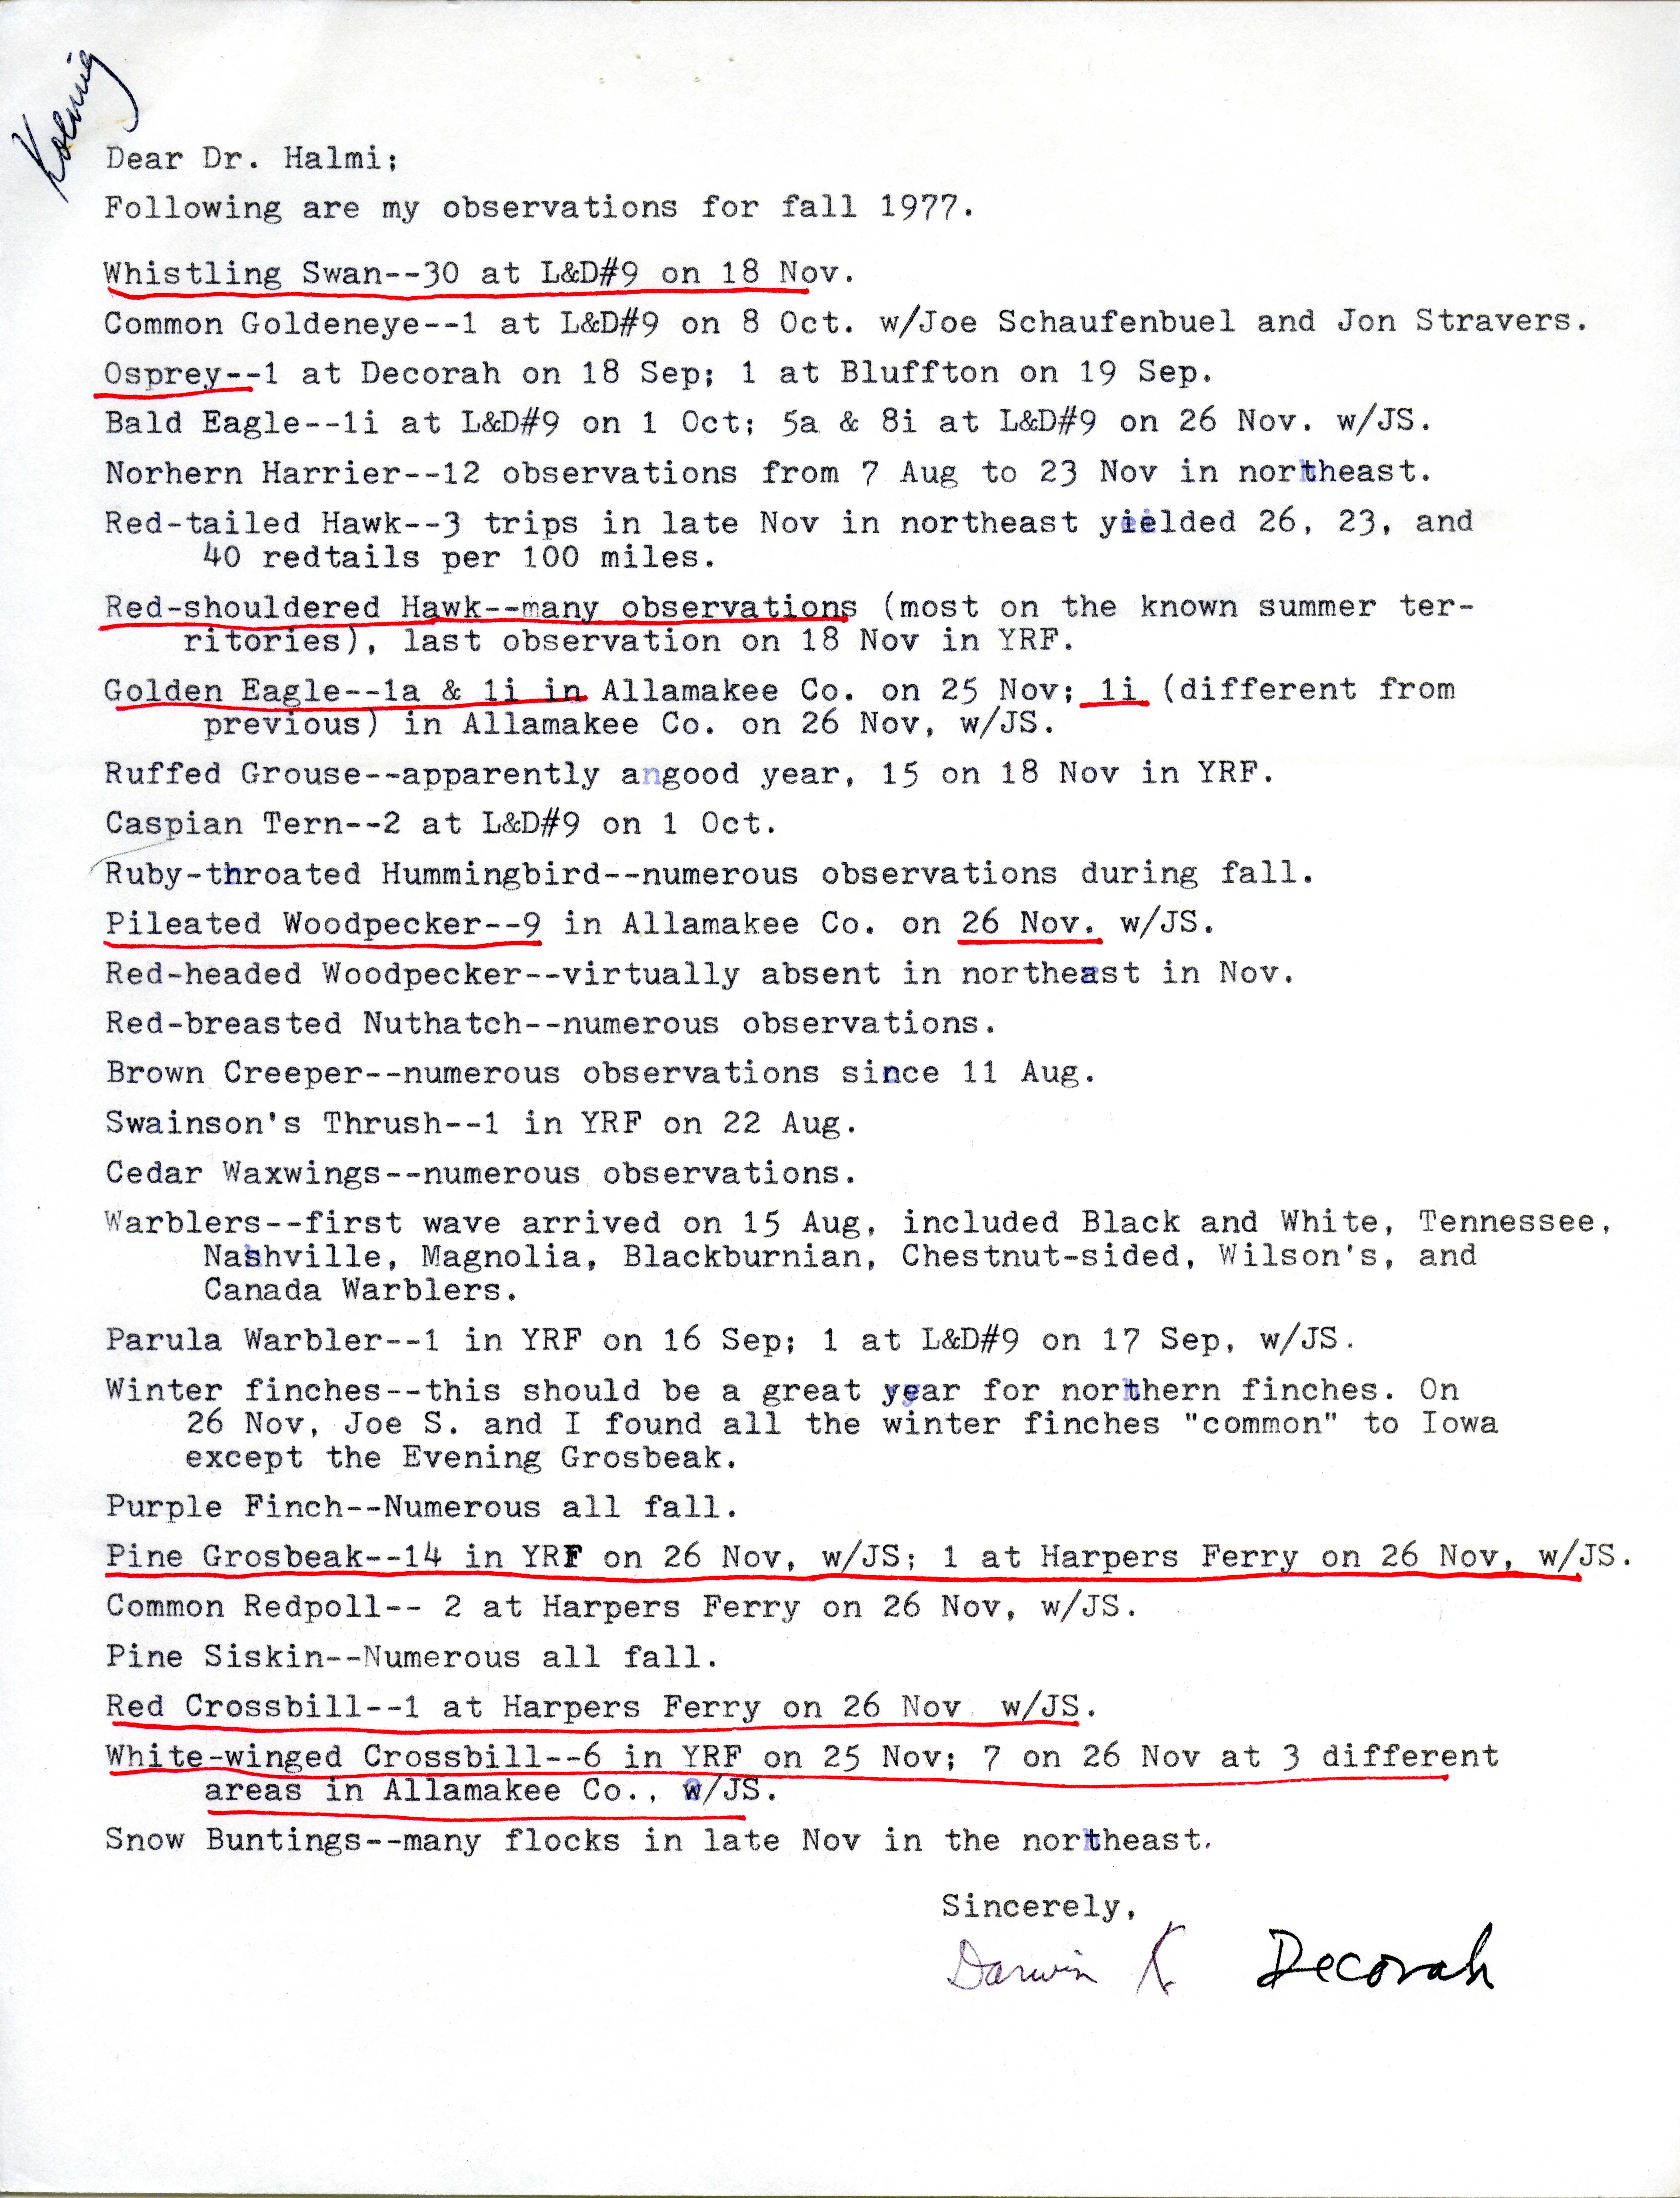 Darwin Koenig letter to Nicholas S. Halmi regarding bird sightings, fall 1977